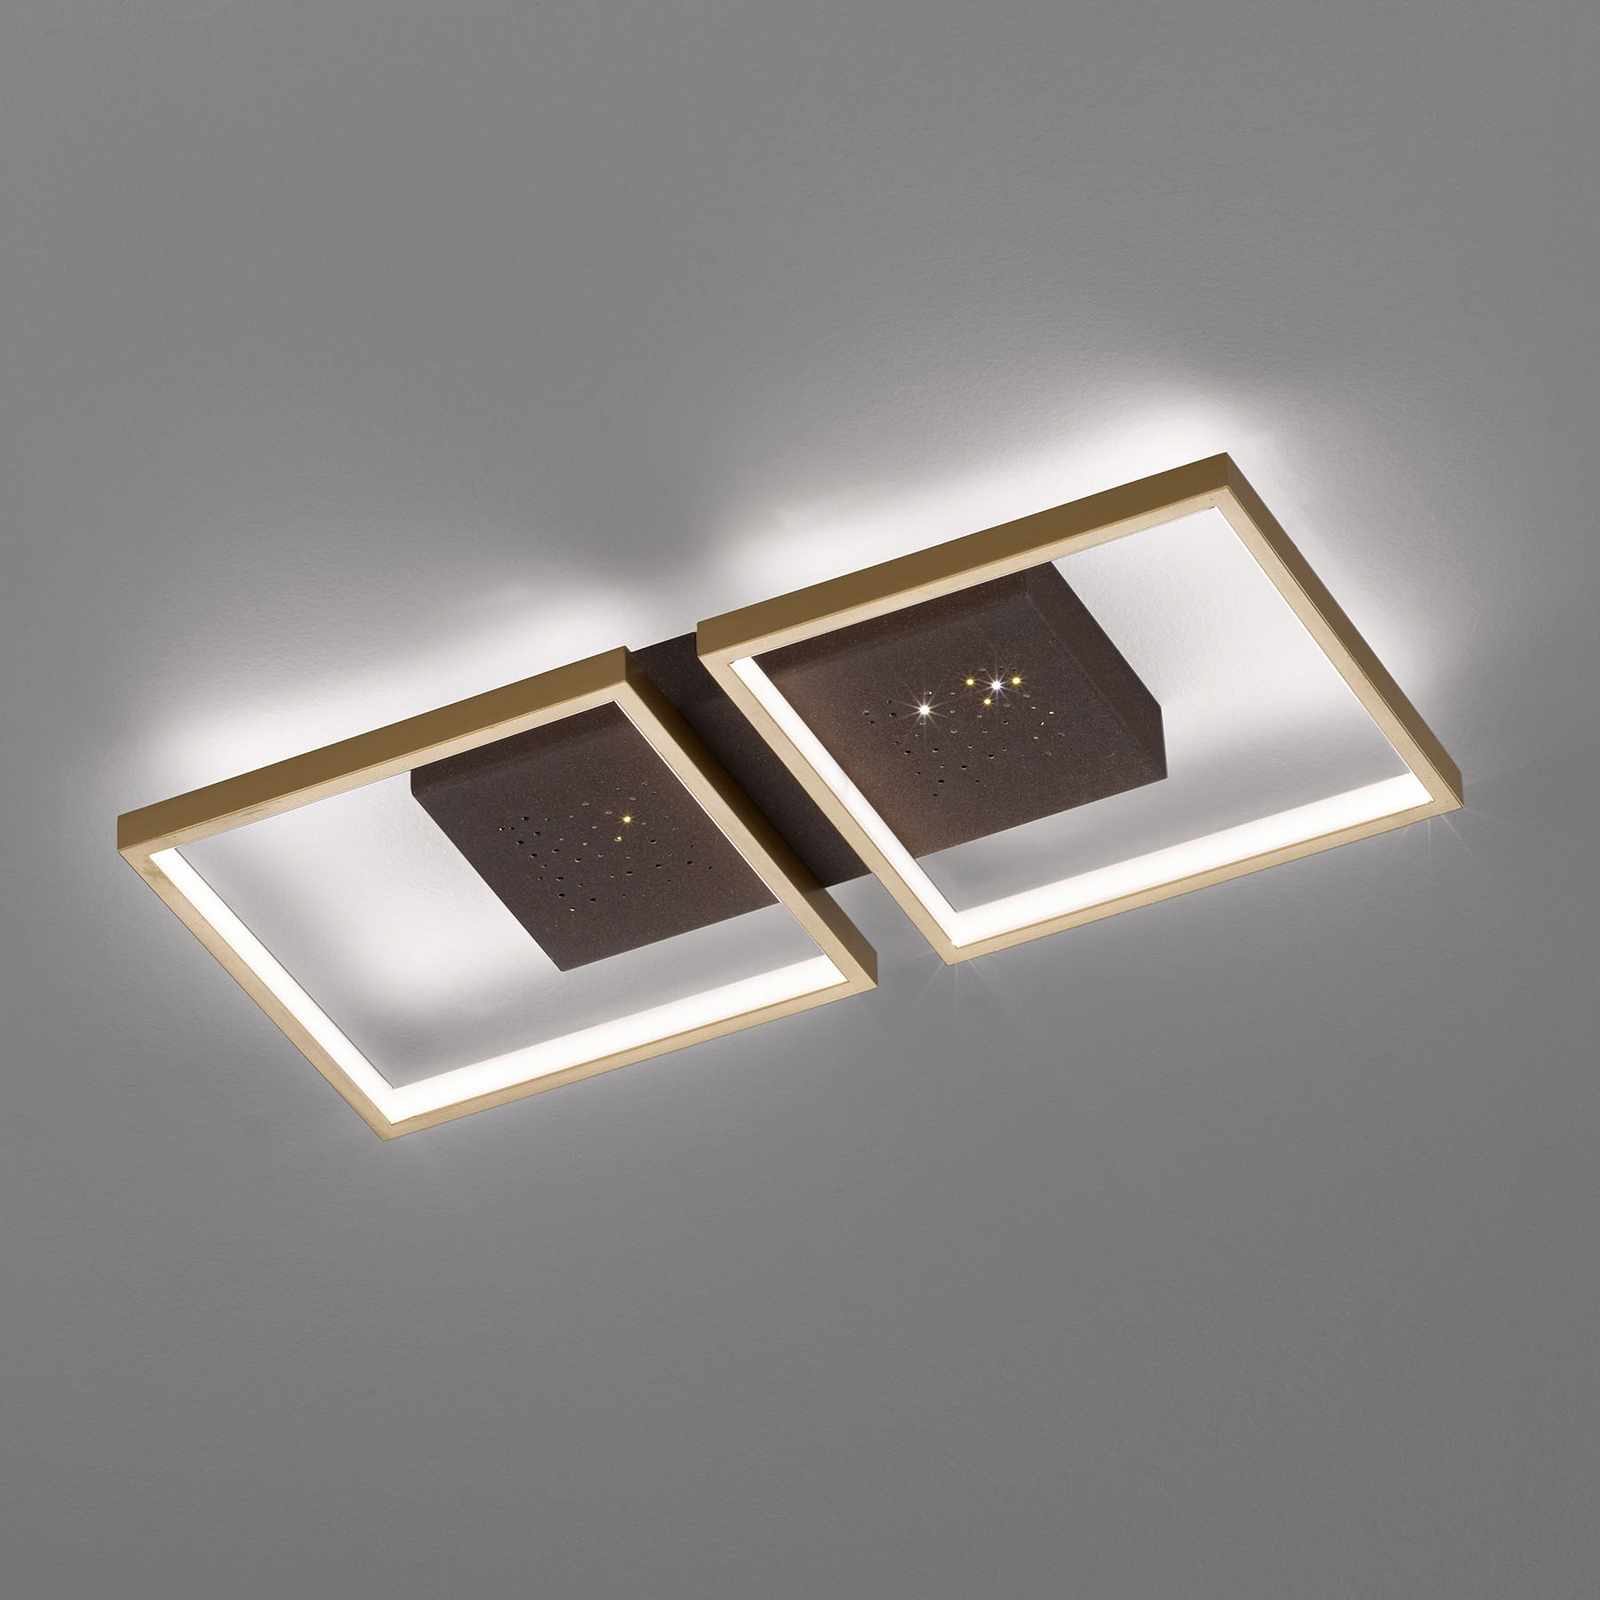 LED-taklampa Pix, brun, 2 lampor 54x25cm